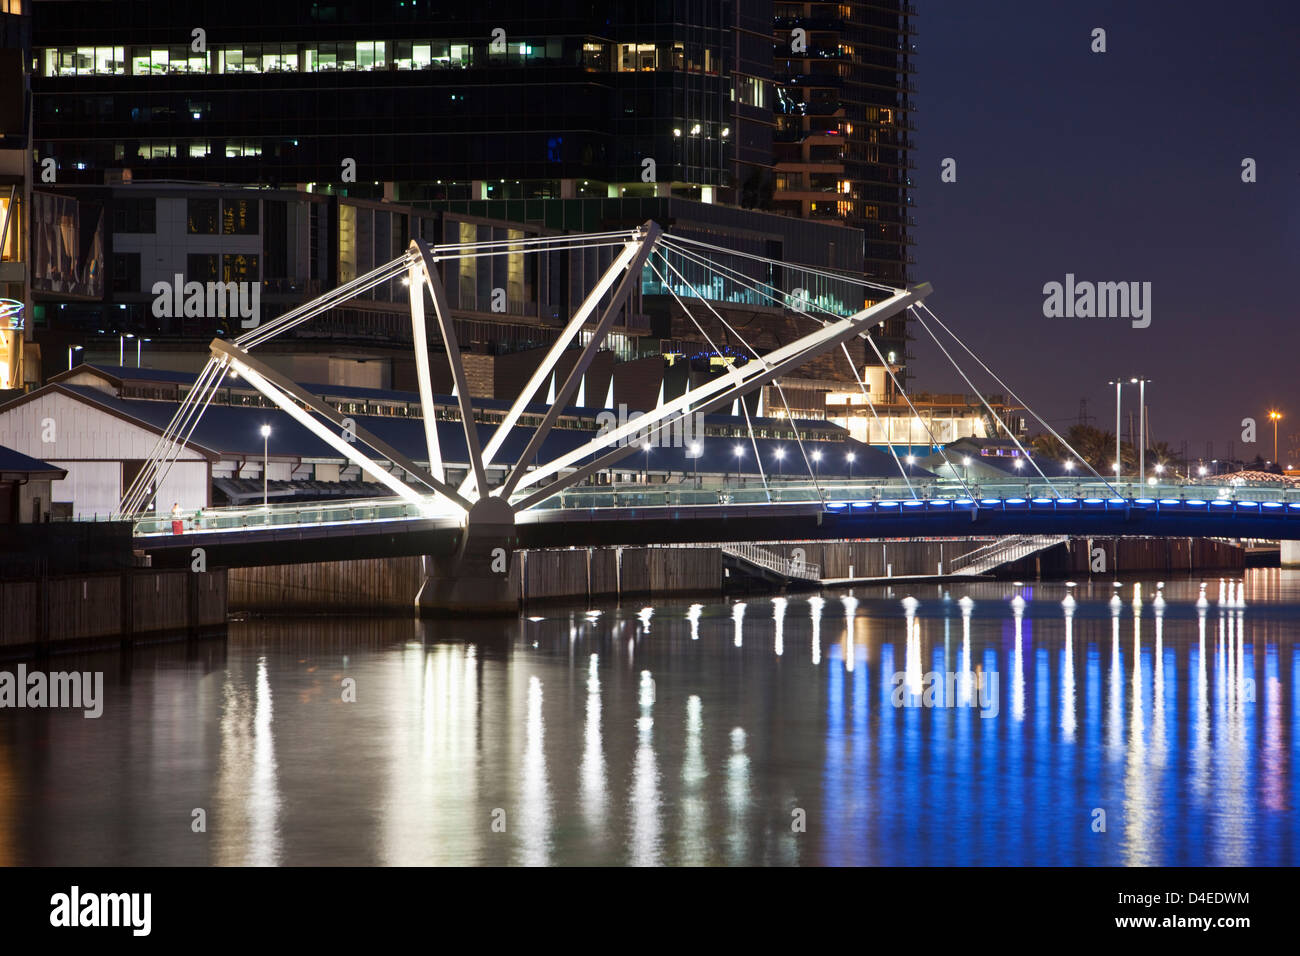 The Seafarers Bridge - a footbridge connecting Docklands with South Wharf. Melbourne, Victoria, Australia Stock Photo